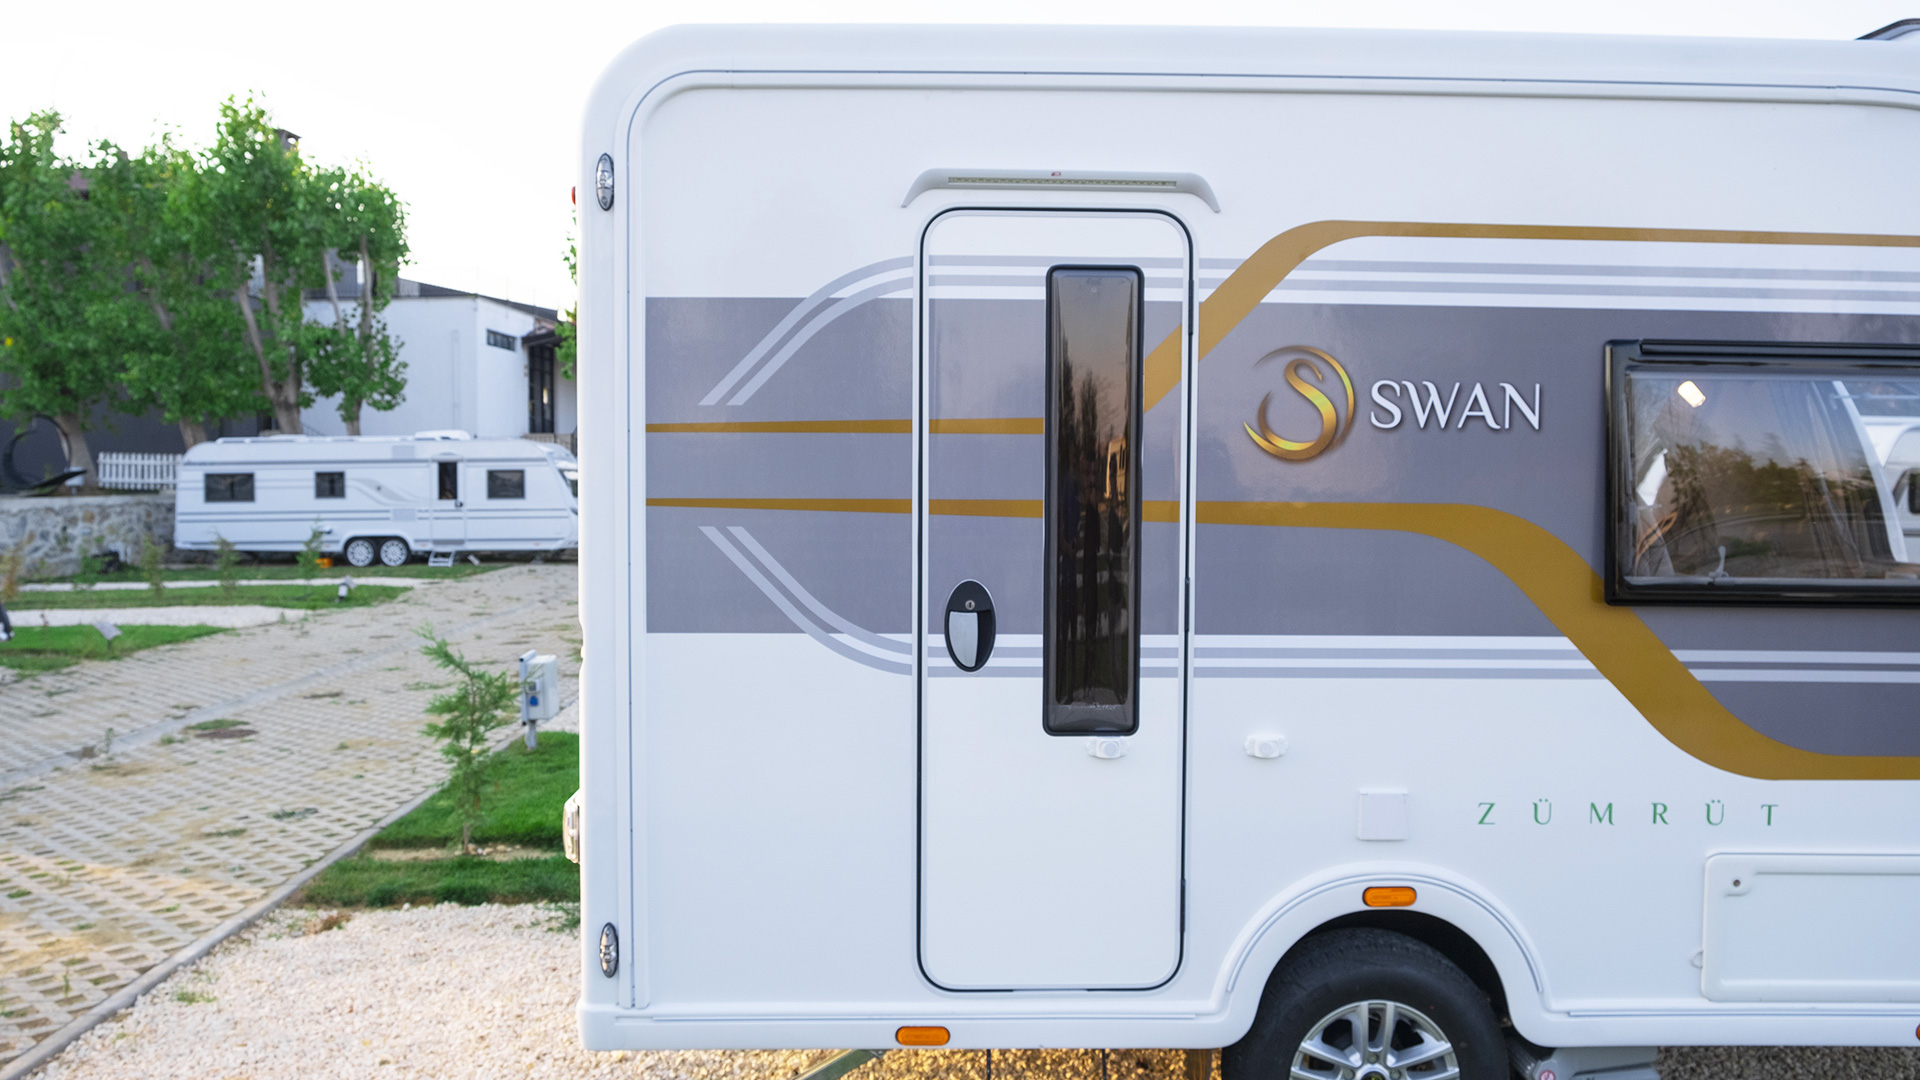 Swan Caravan Zümrüt Model Exterior Design